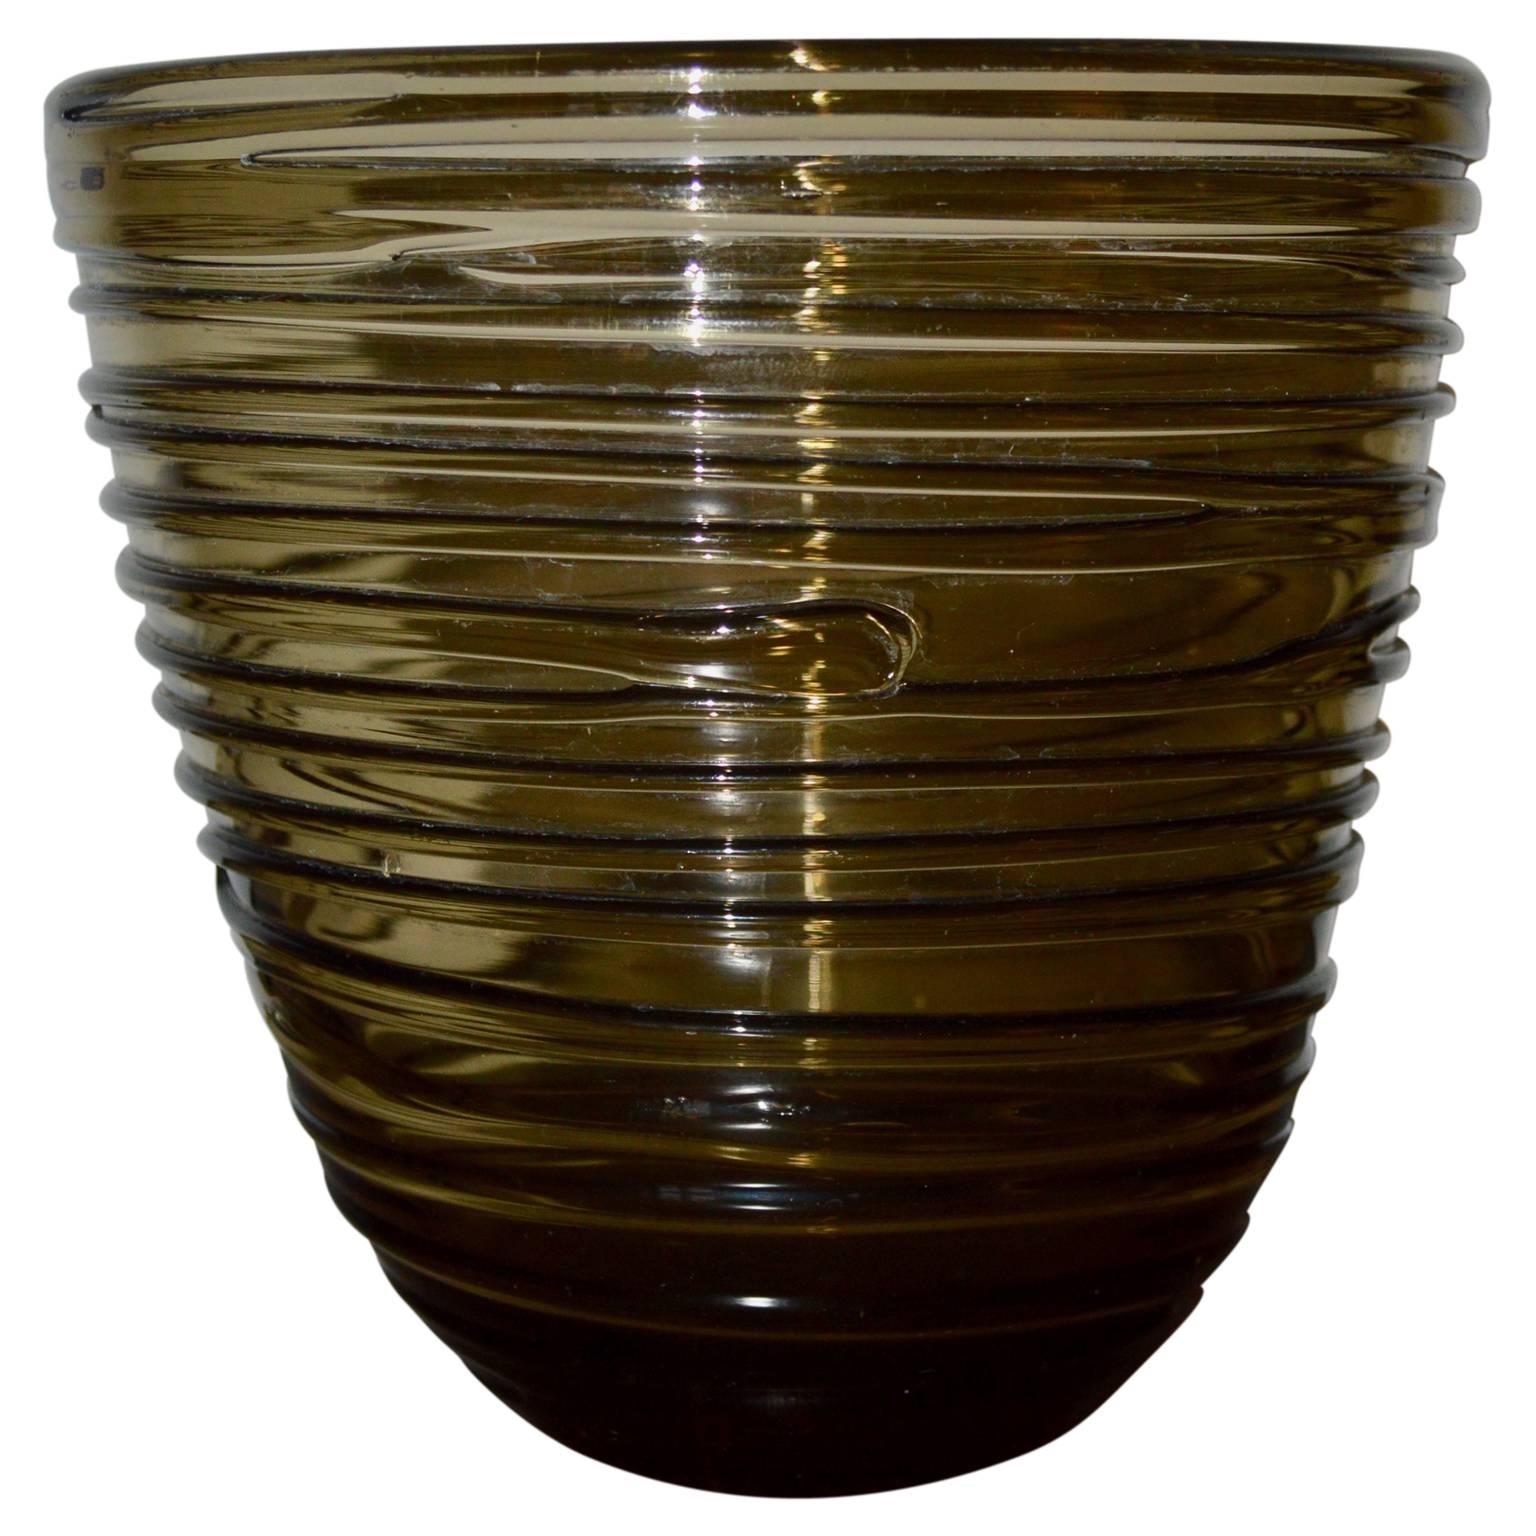 Smoked rifled brown tinted glass vase.